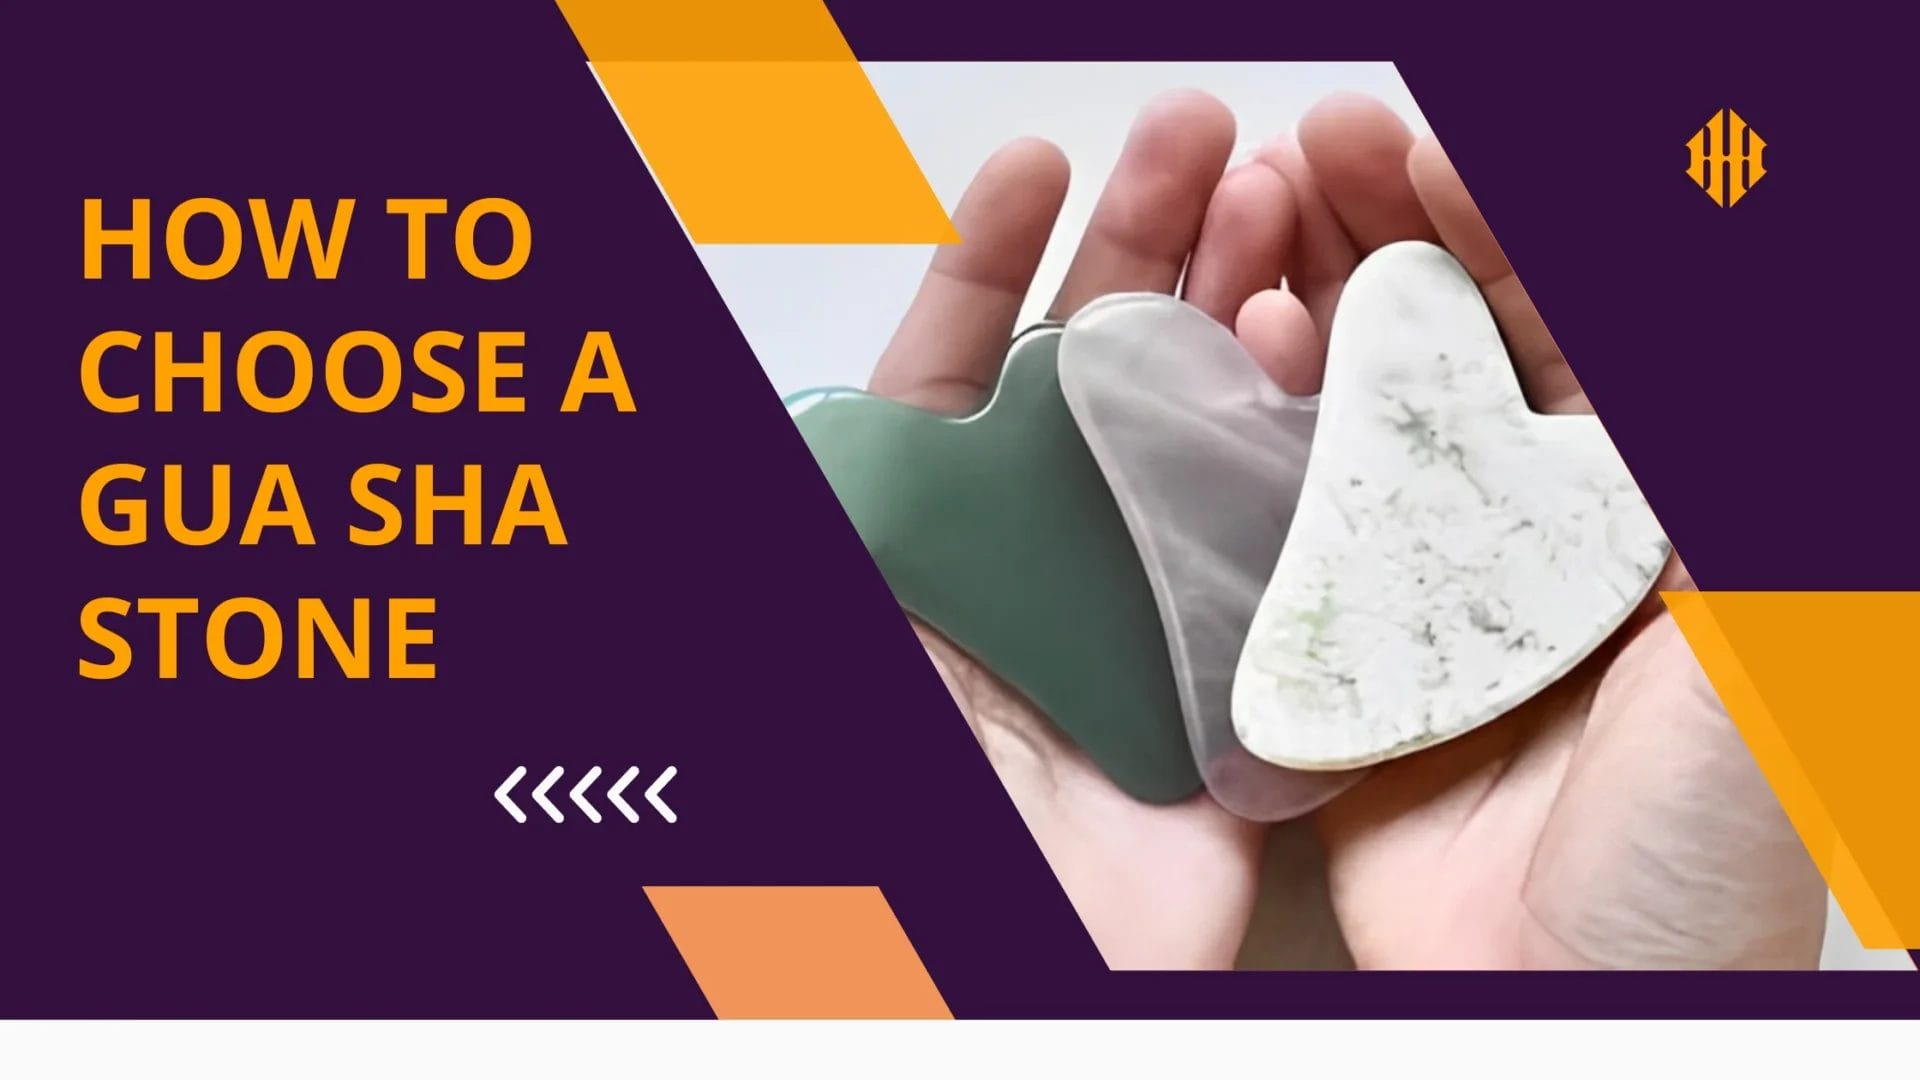 How to choose a gua sha stone